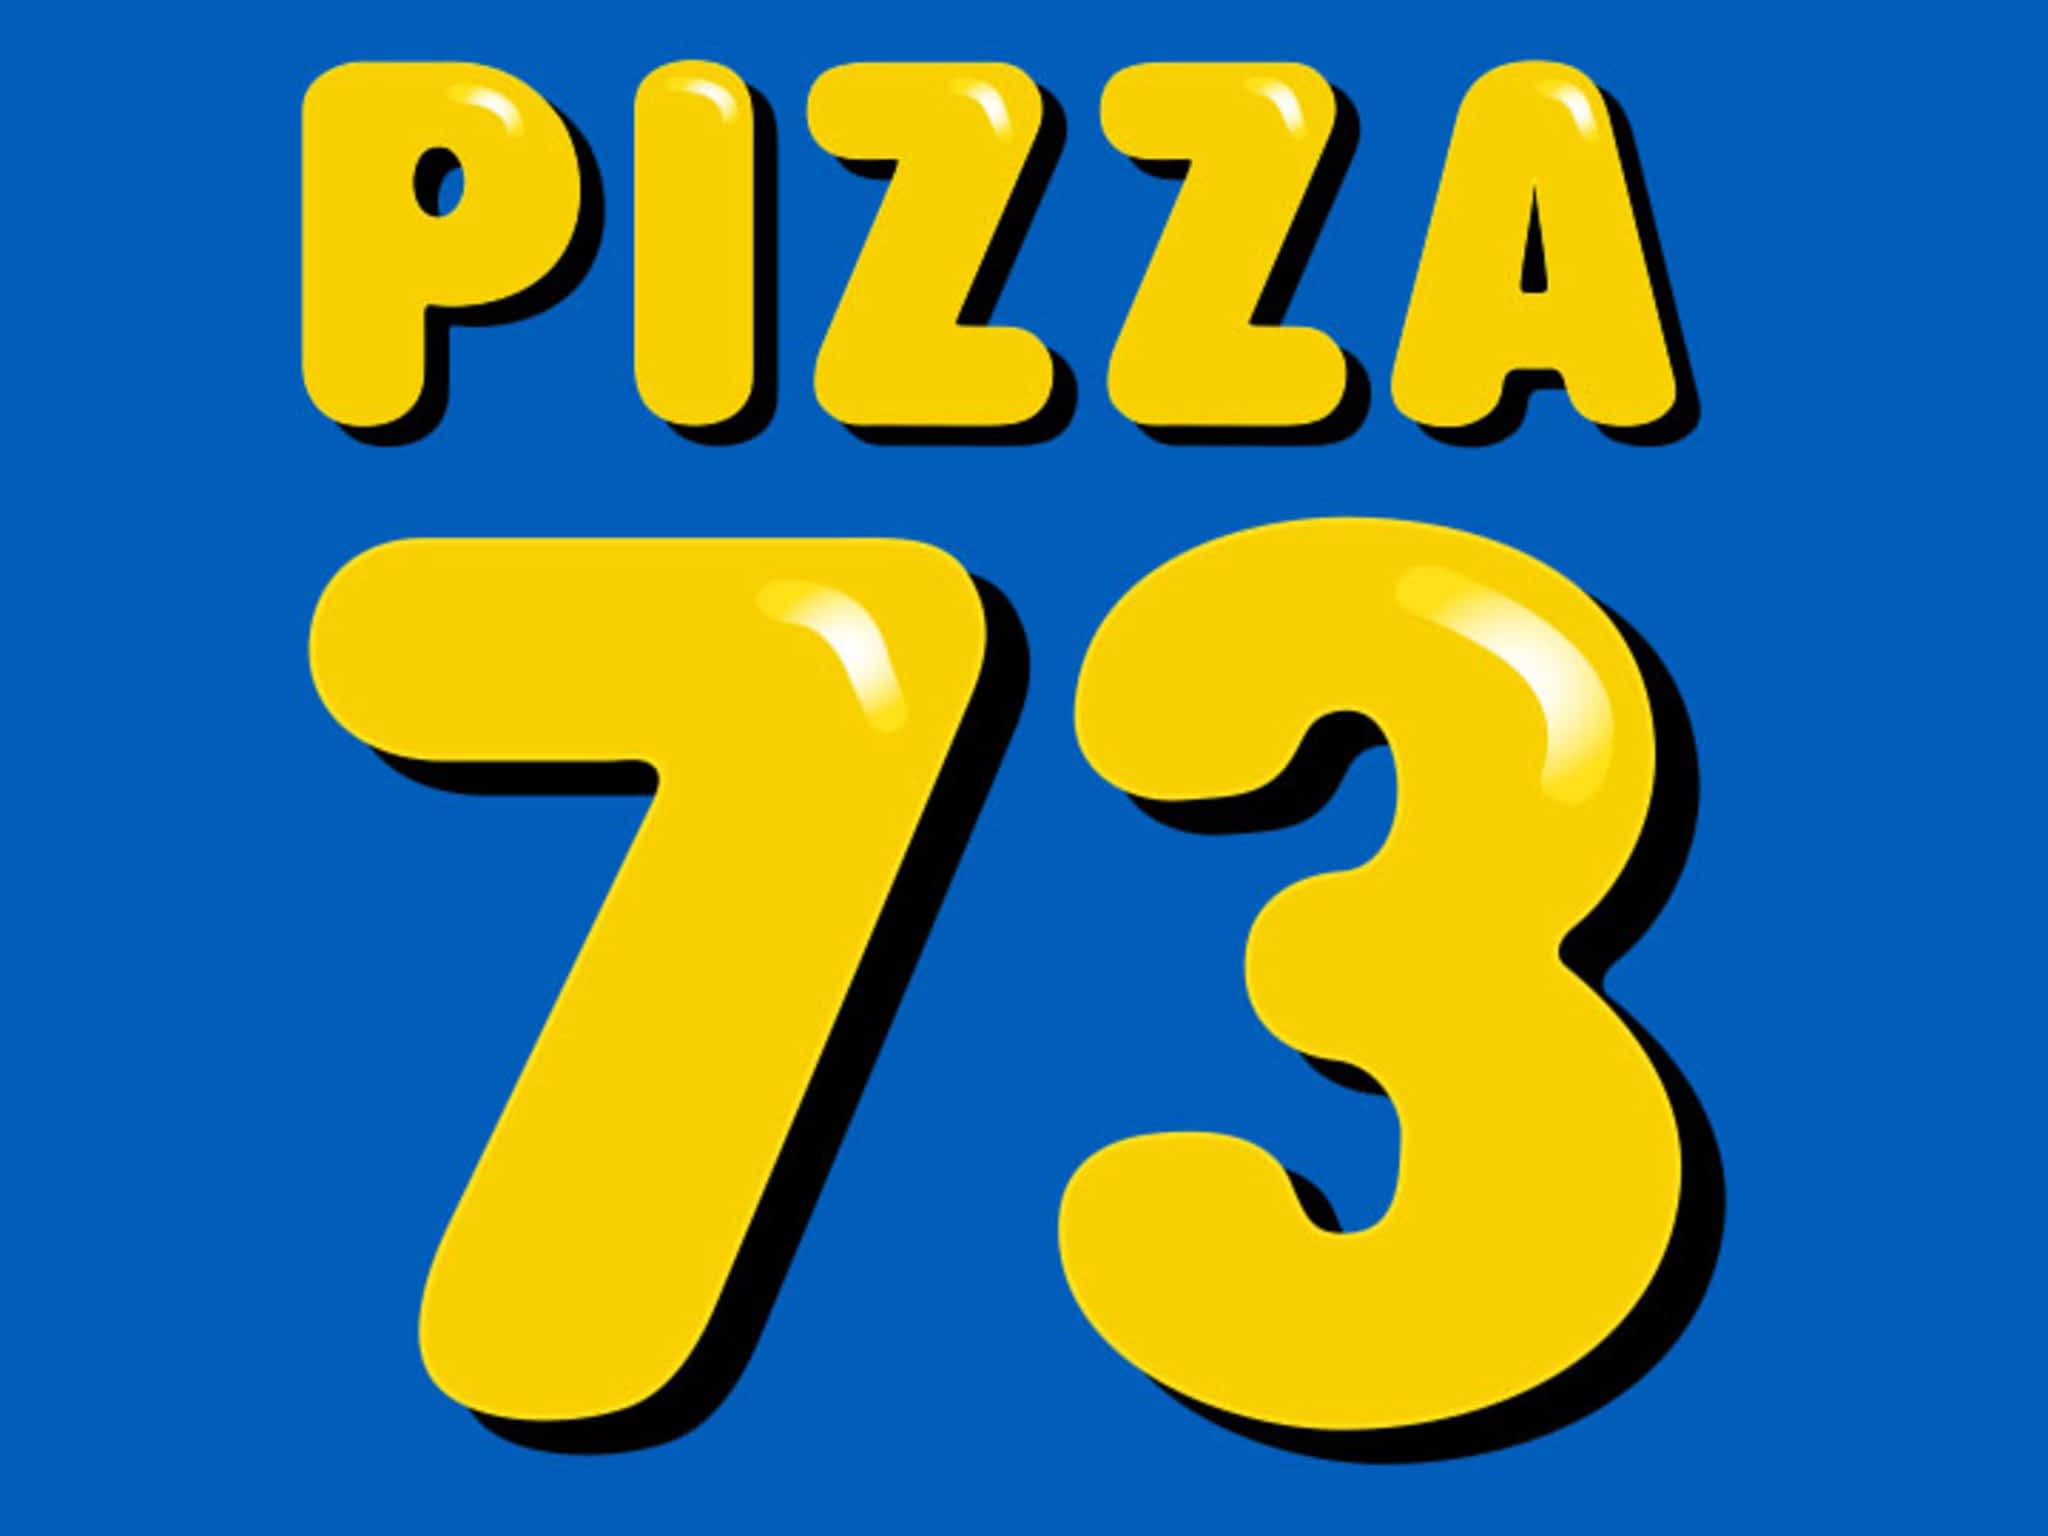 photo Pizza 73